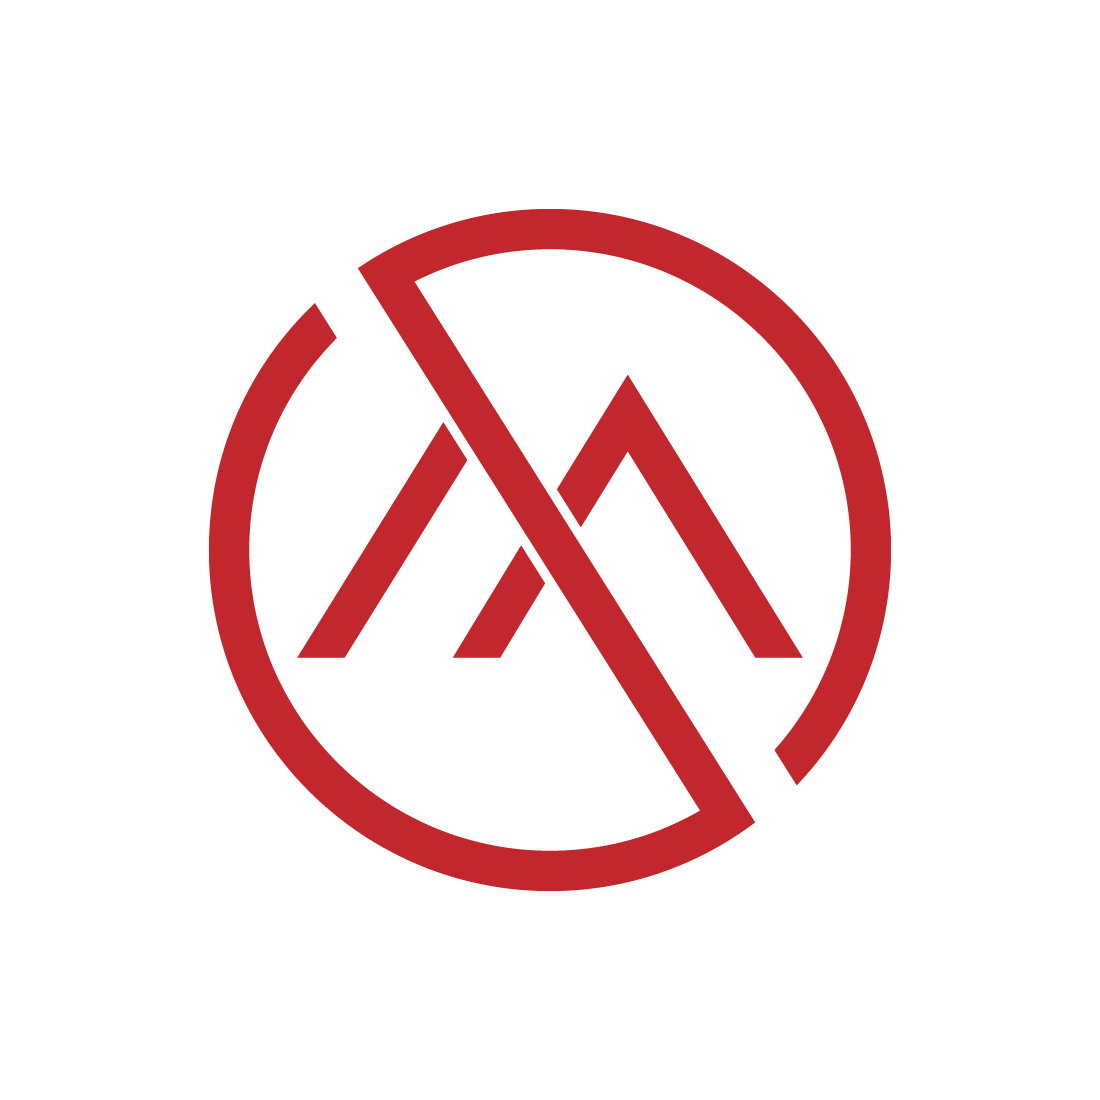 M simple logo design preview image.